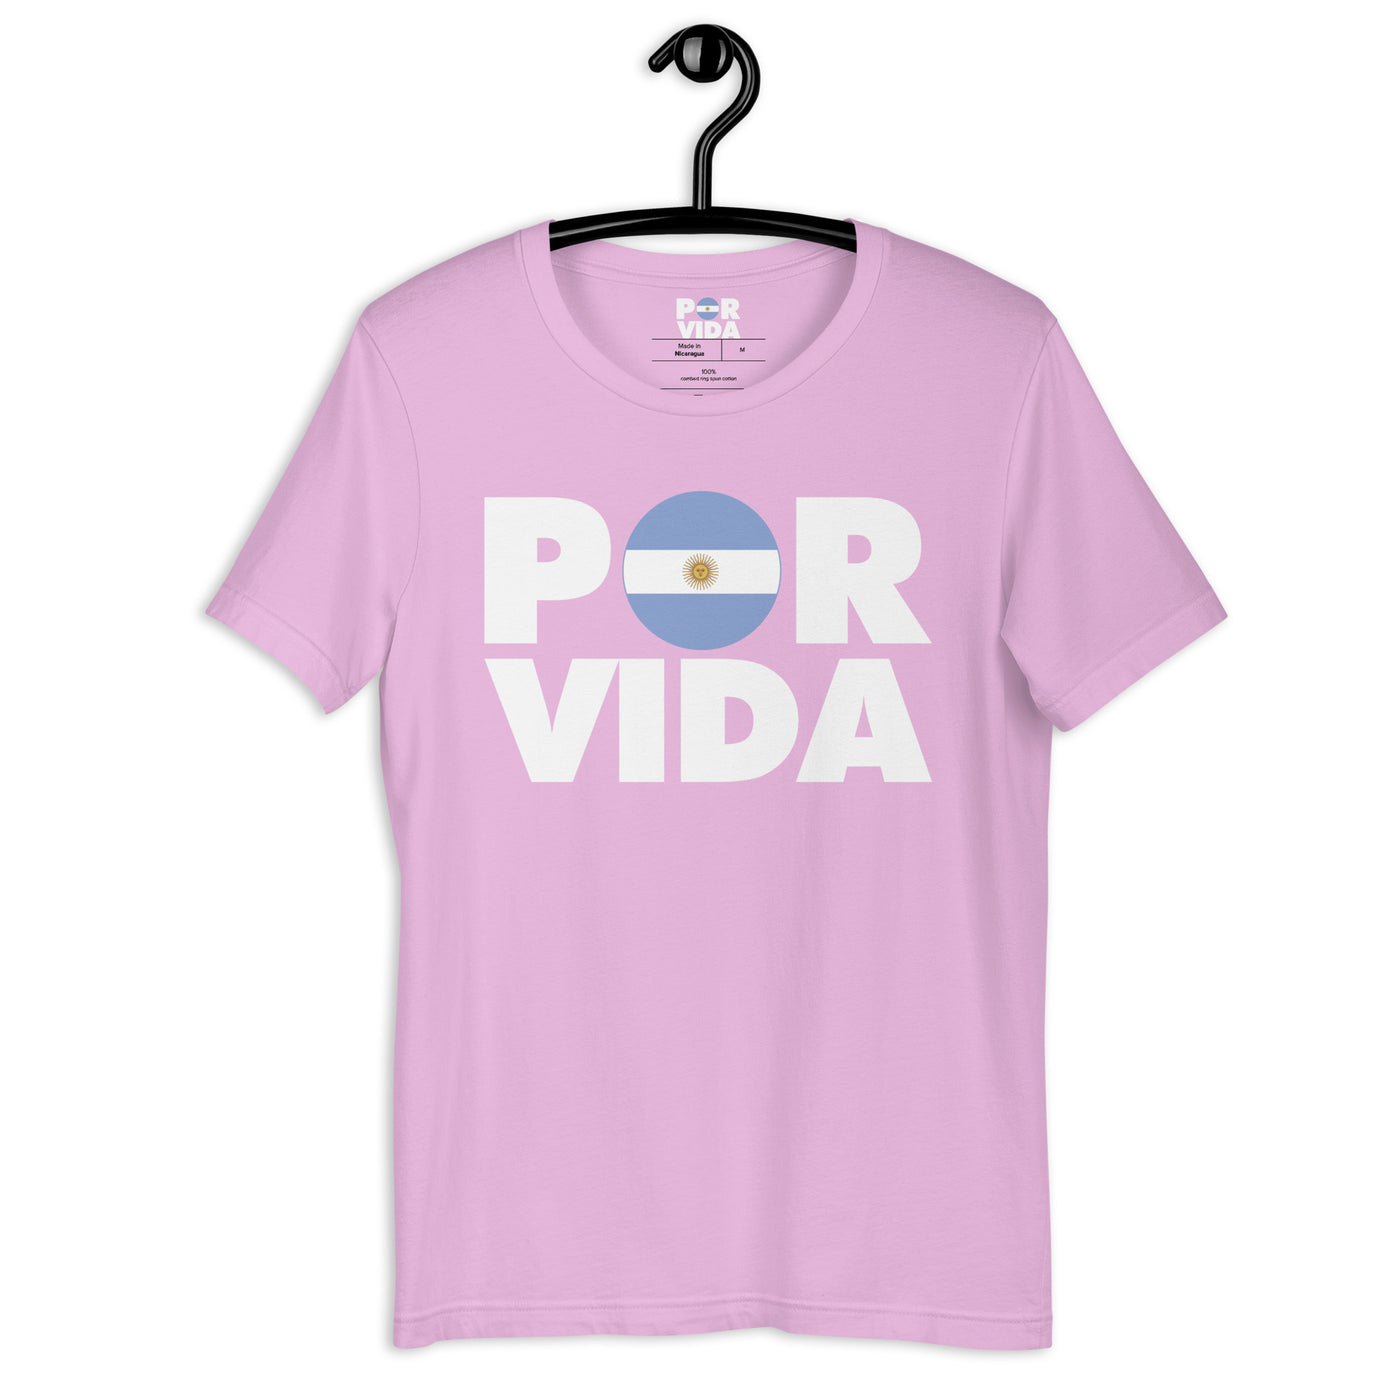 POR VIDA (Argentina - White Text) Unisex t-shirt